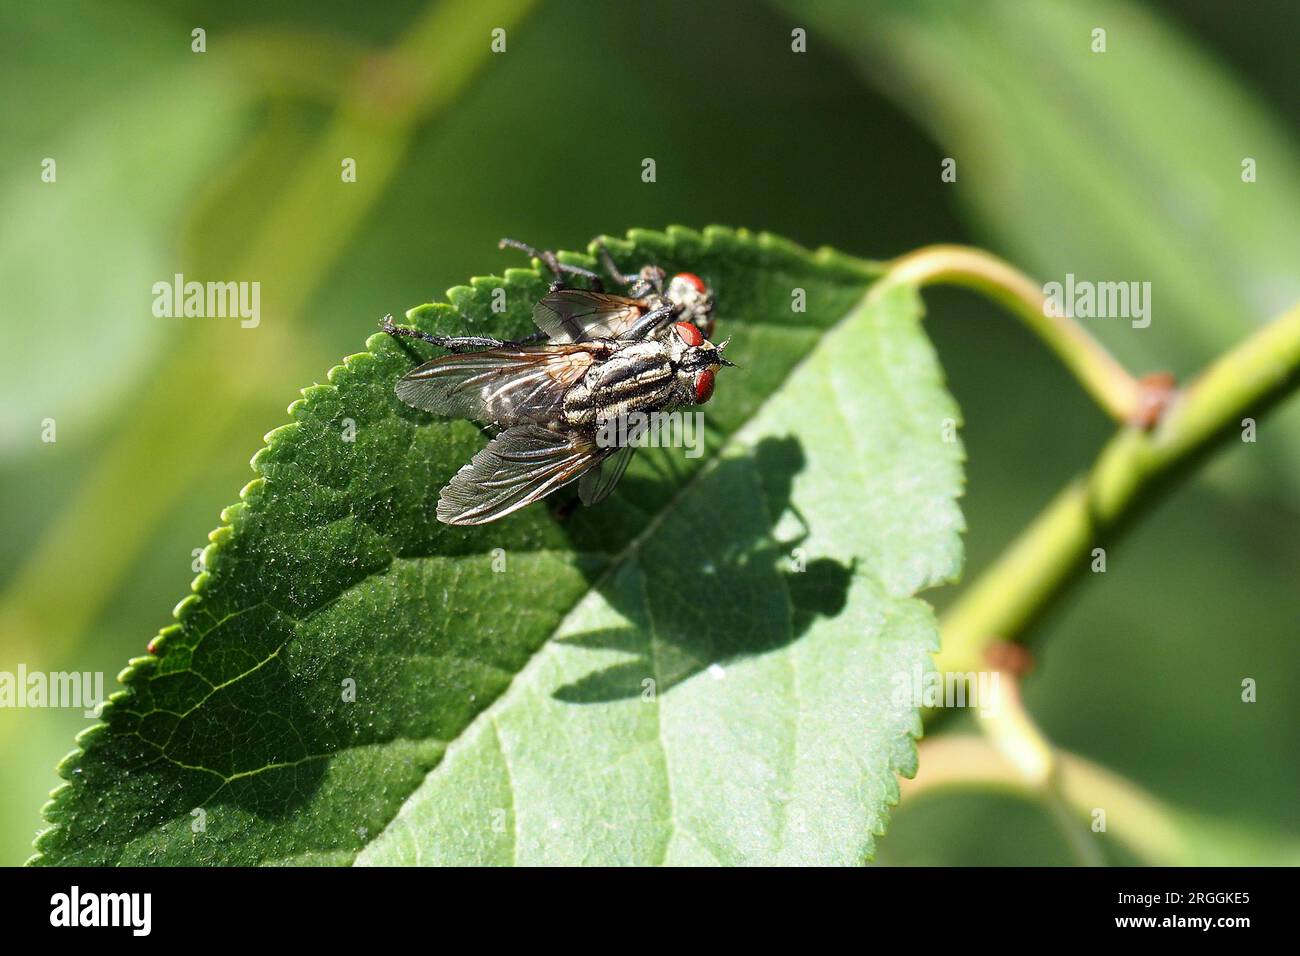 common flesh fly, Graue Fleischfliege, mouche grise de la viande, Sarcophaga carnaria, közönséges húslégy, Budapest, Hungary, Magyarország, Europe Stock Photo